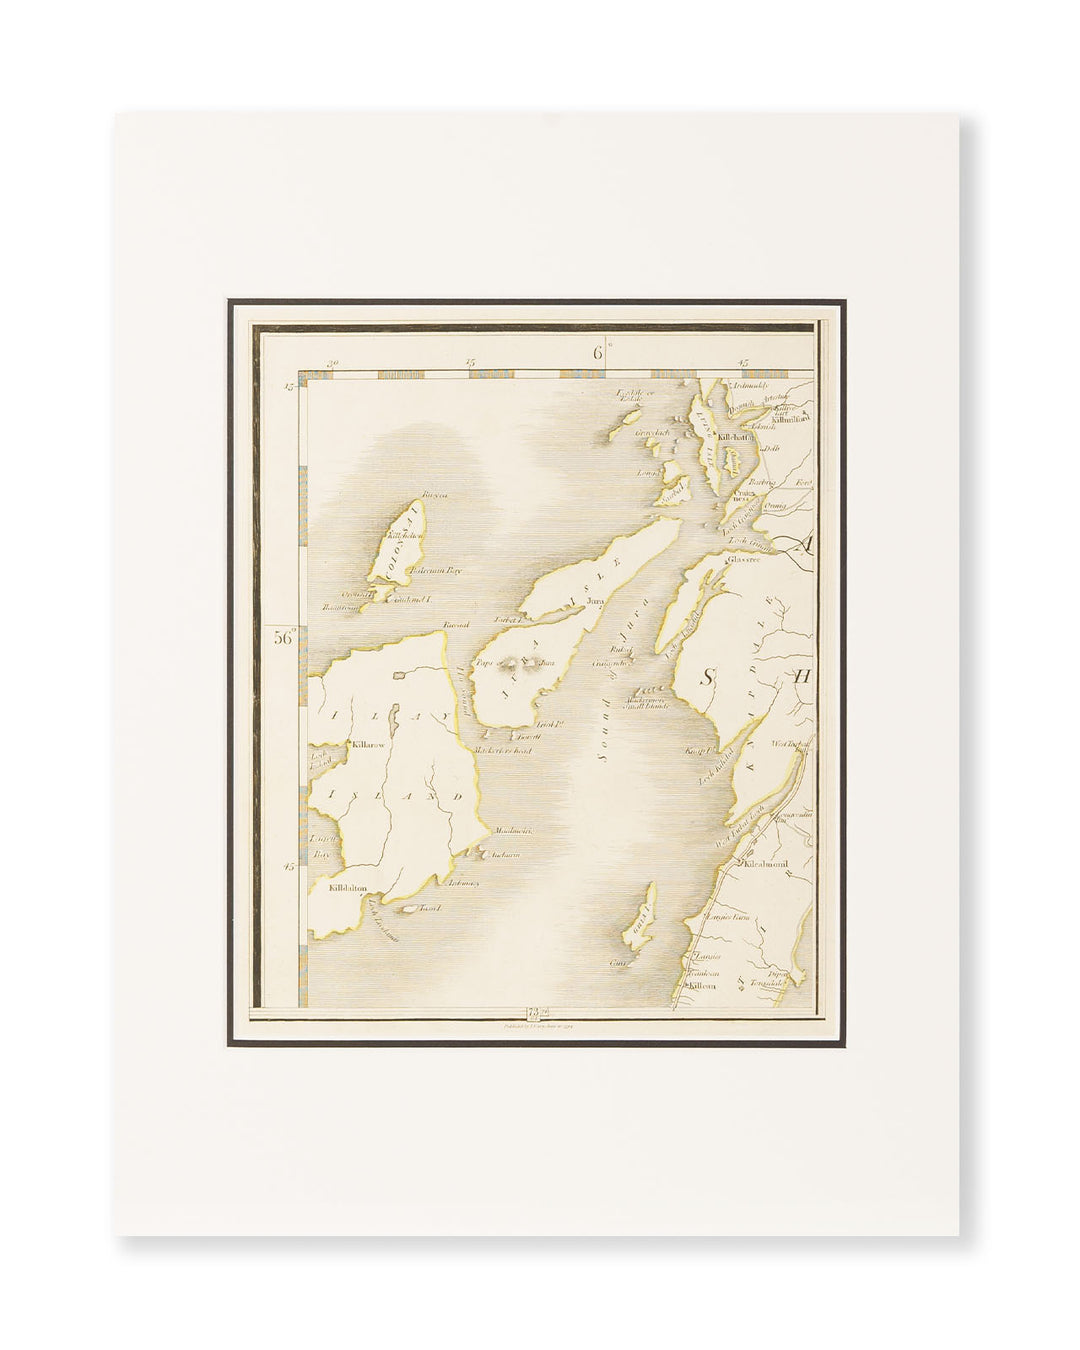 Authentic Coastal & Waterways Map of Islay and Jura by John Cary, 1794